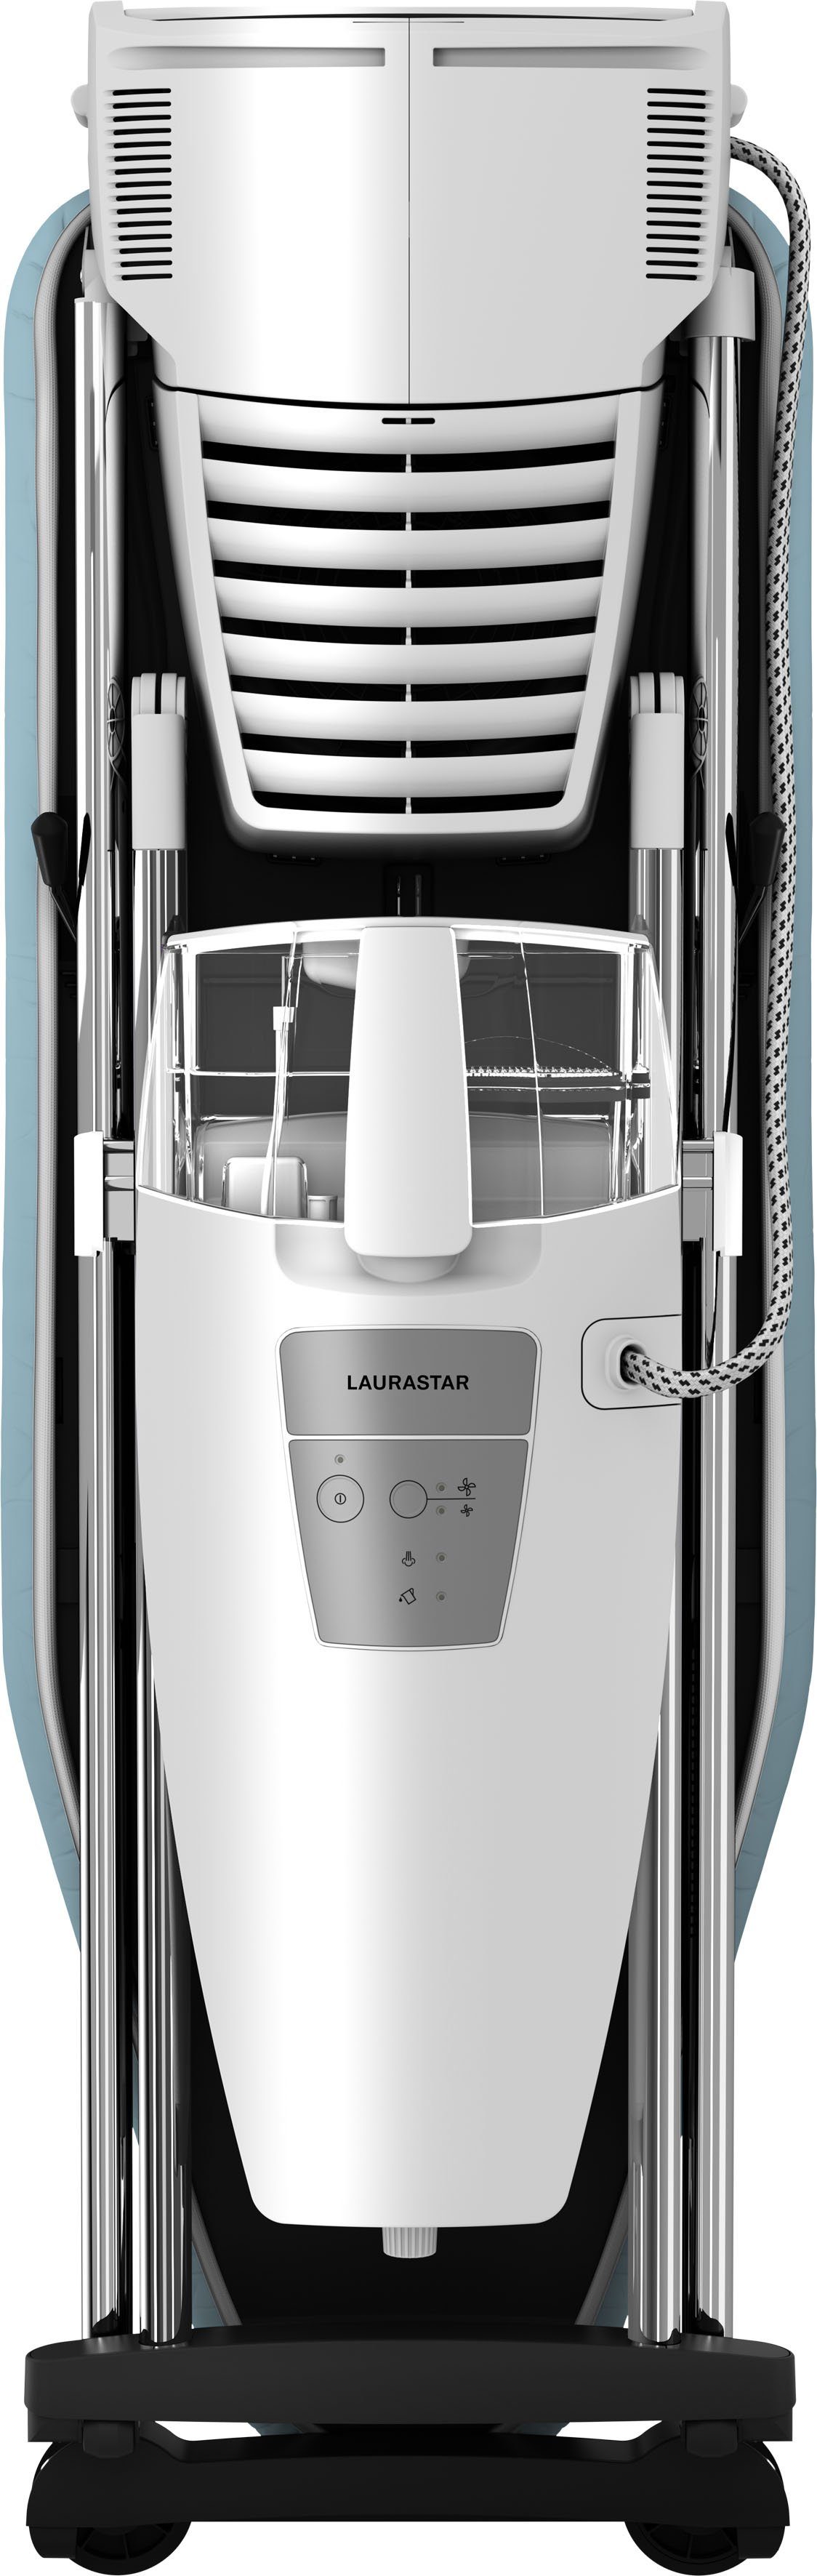 Xtremecover, W LAURASTAR 2200 Bügelsystem + Pure S